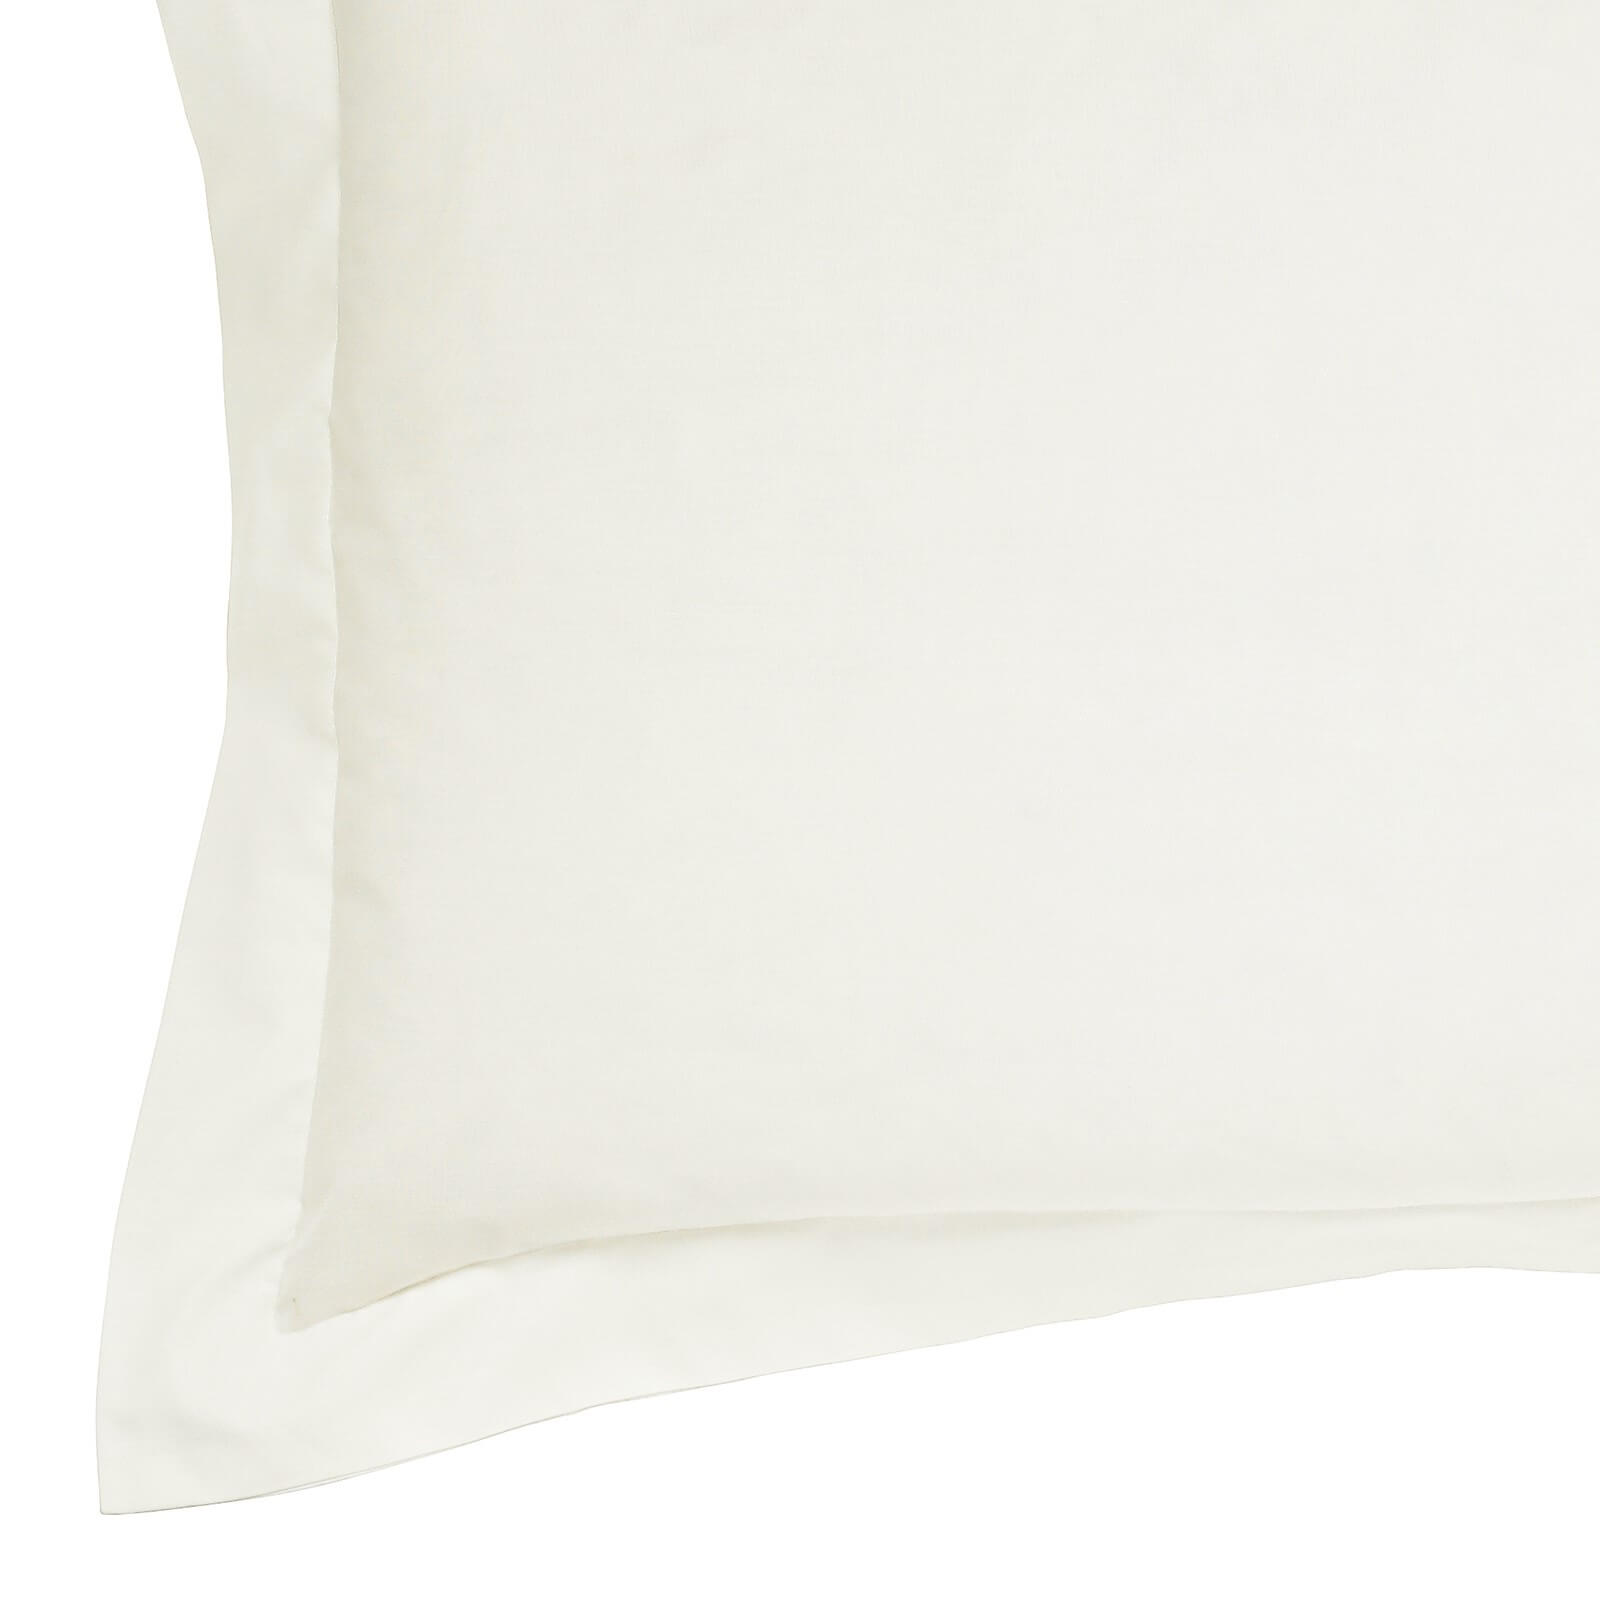 Helena Springfield Plain Dye Oxford Pillowcase - Ivory